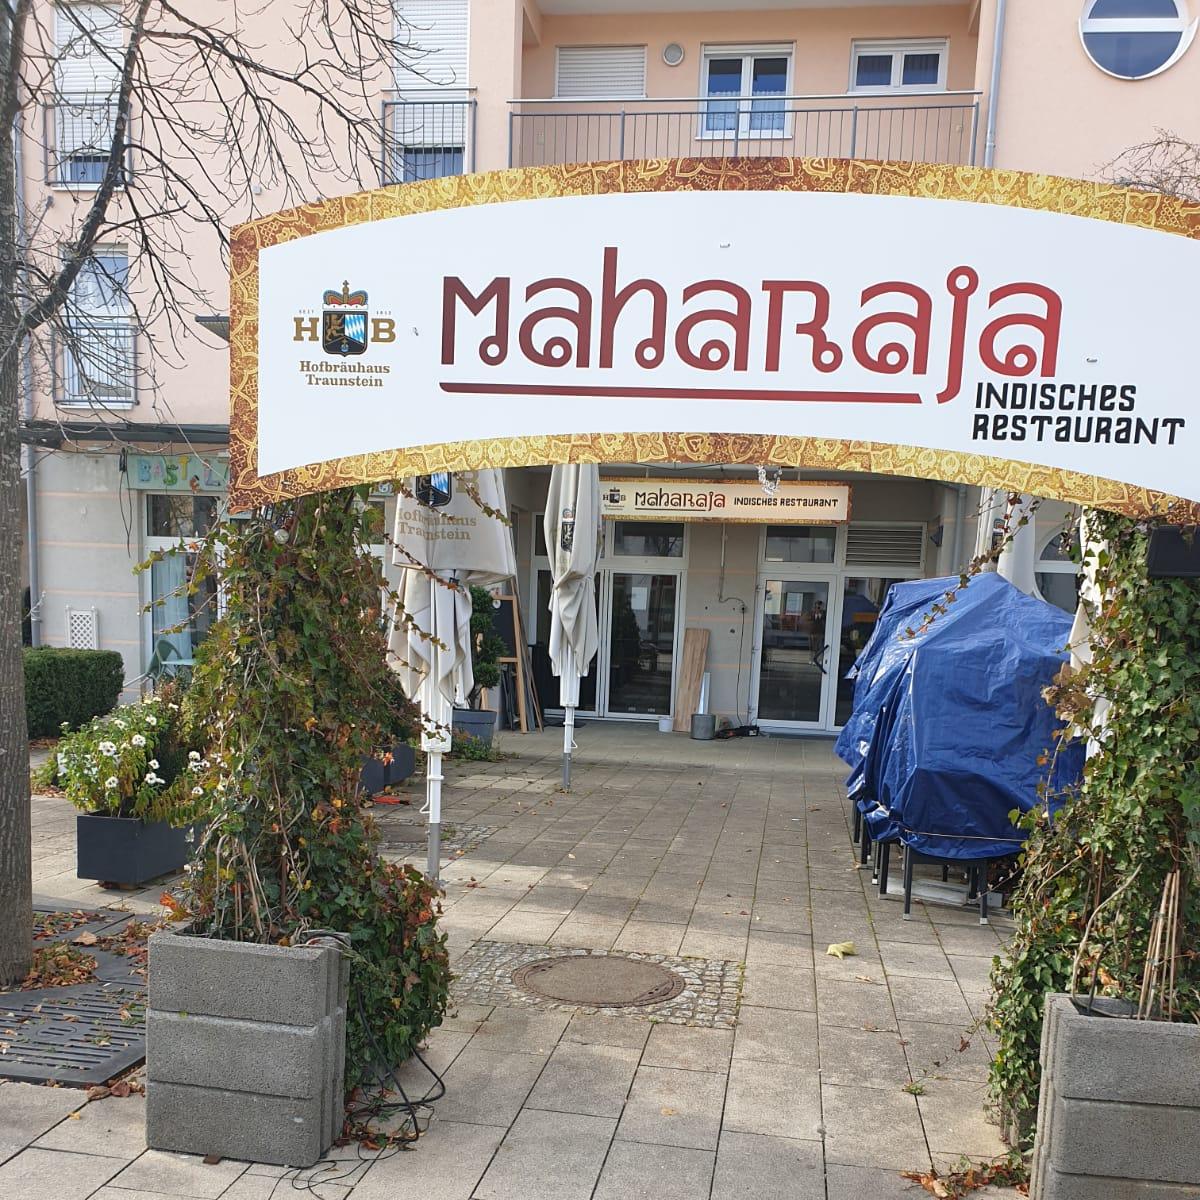 Restaurant "Maharaja indisches Restaurant" in Gilching